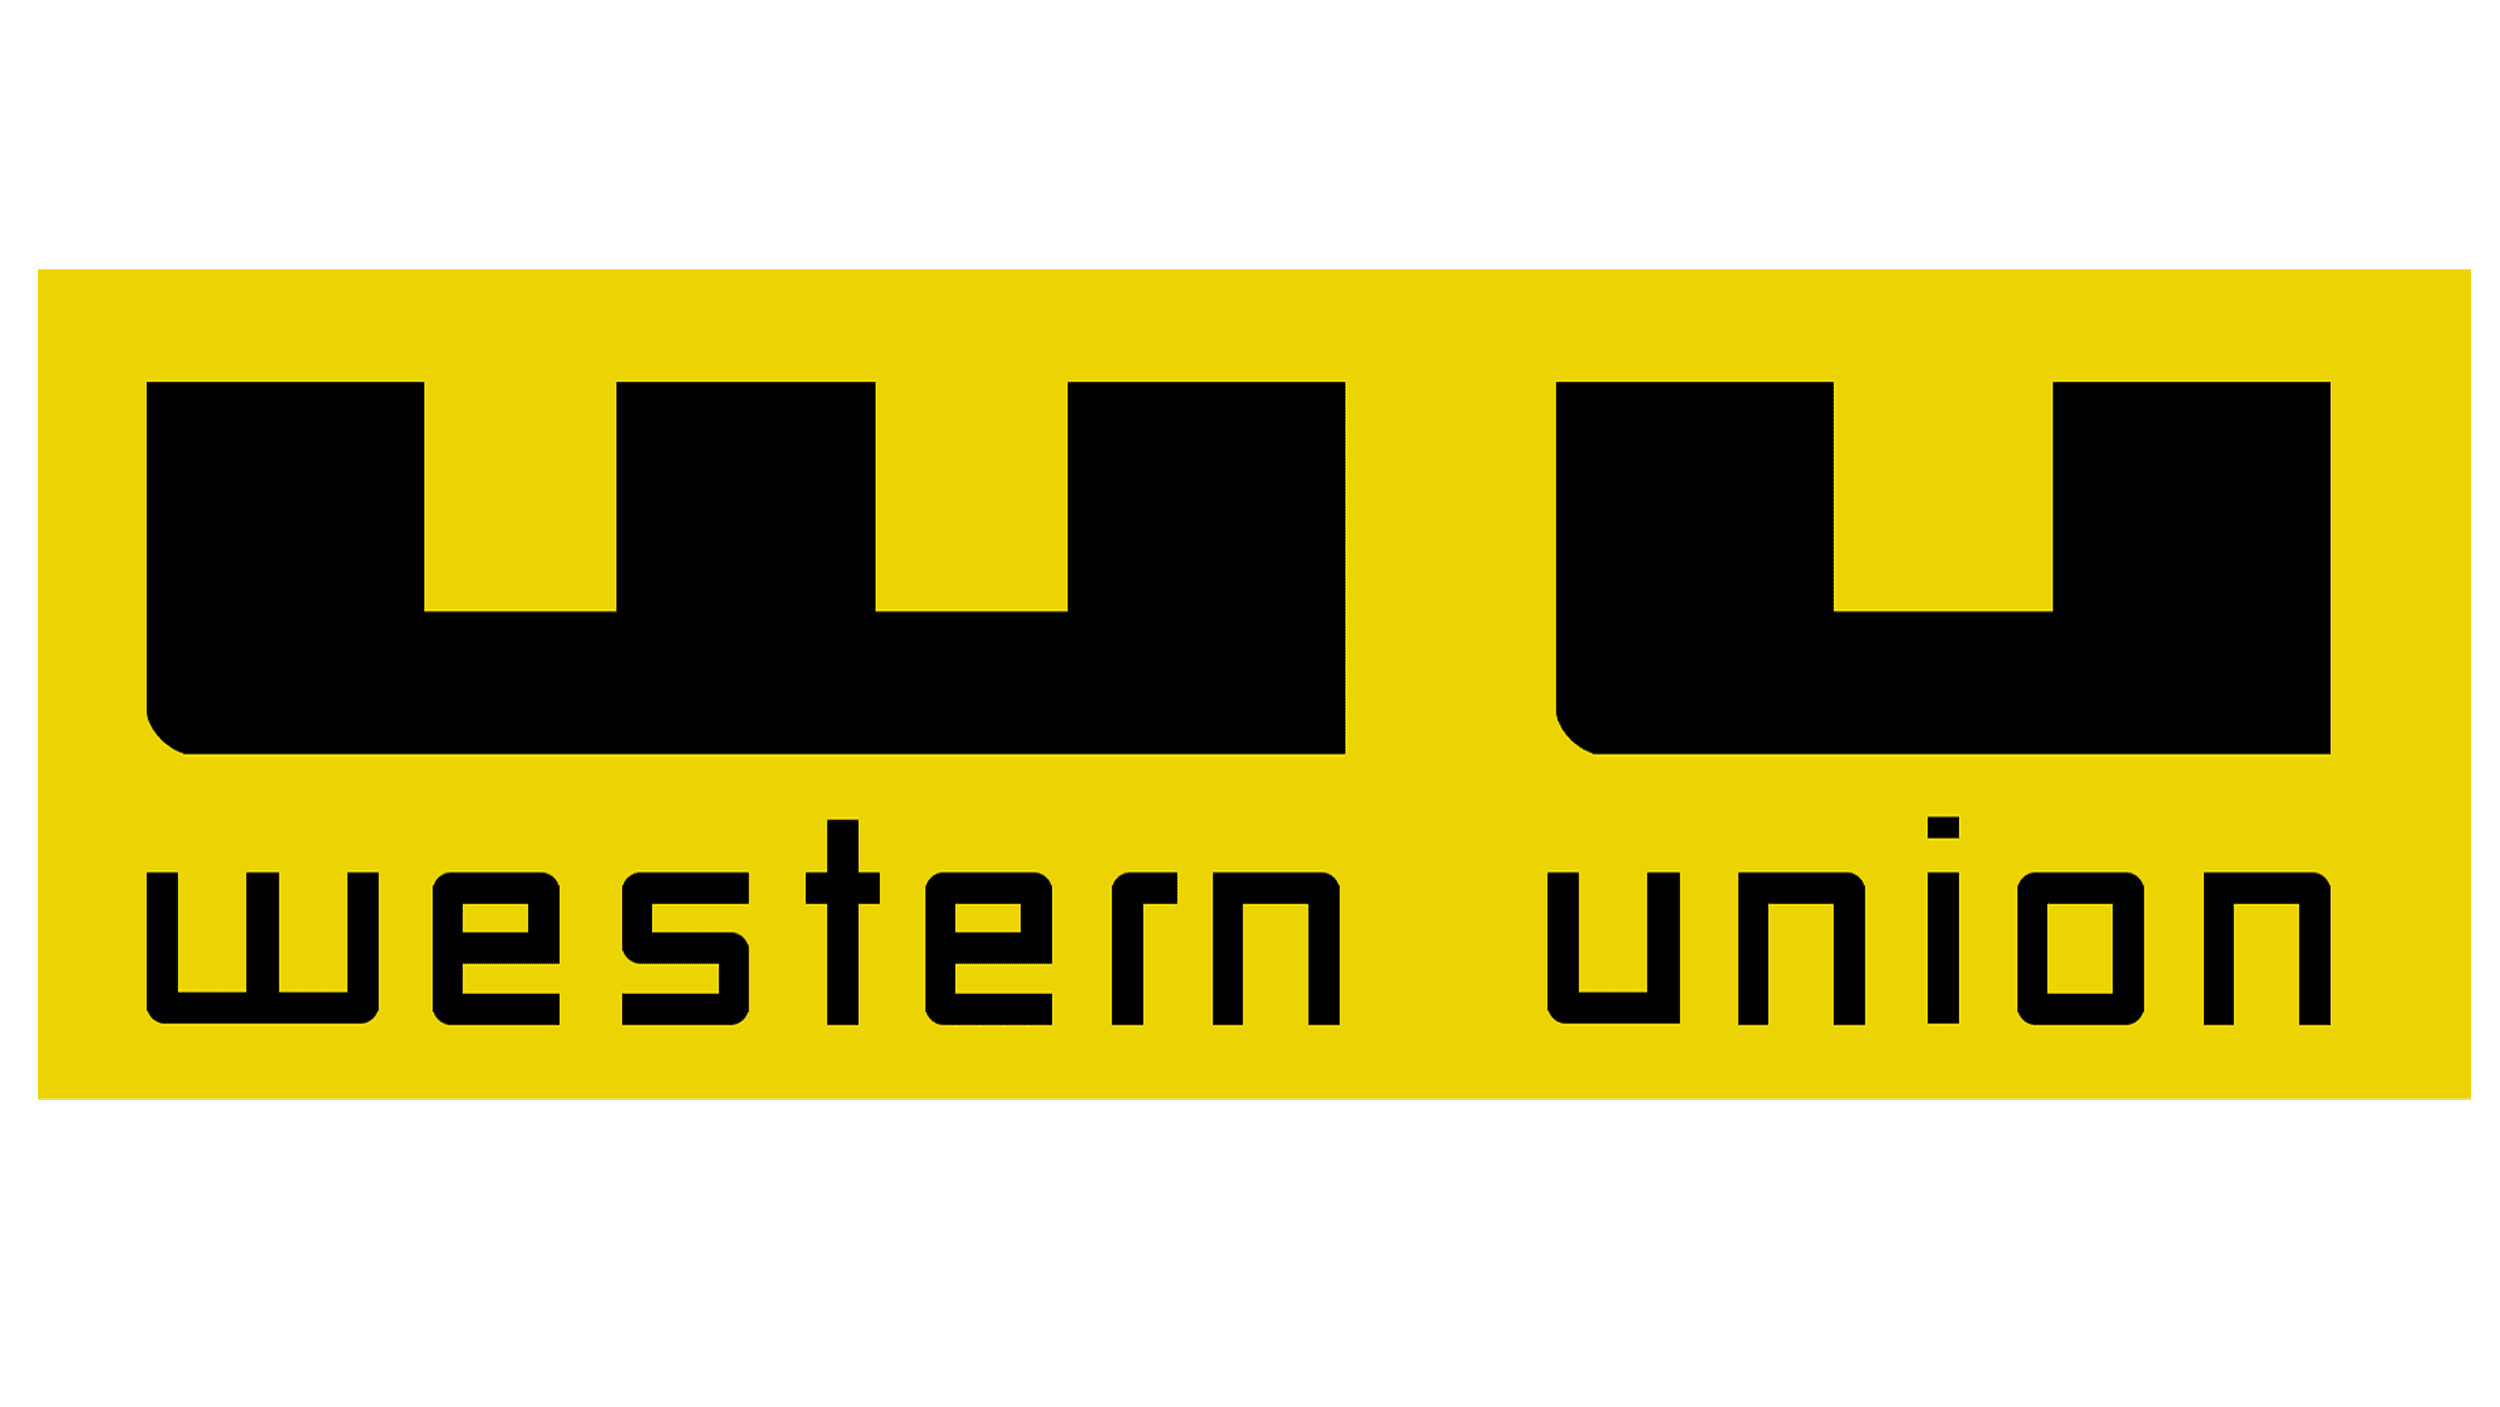 western union logo png